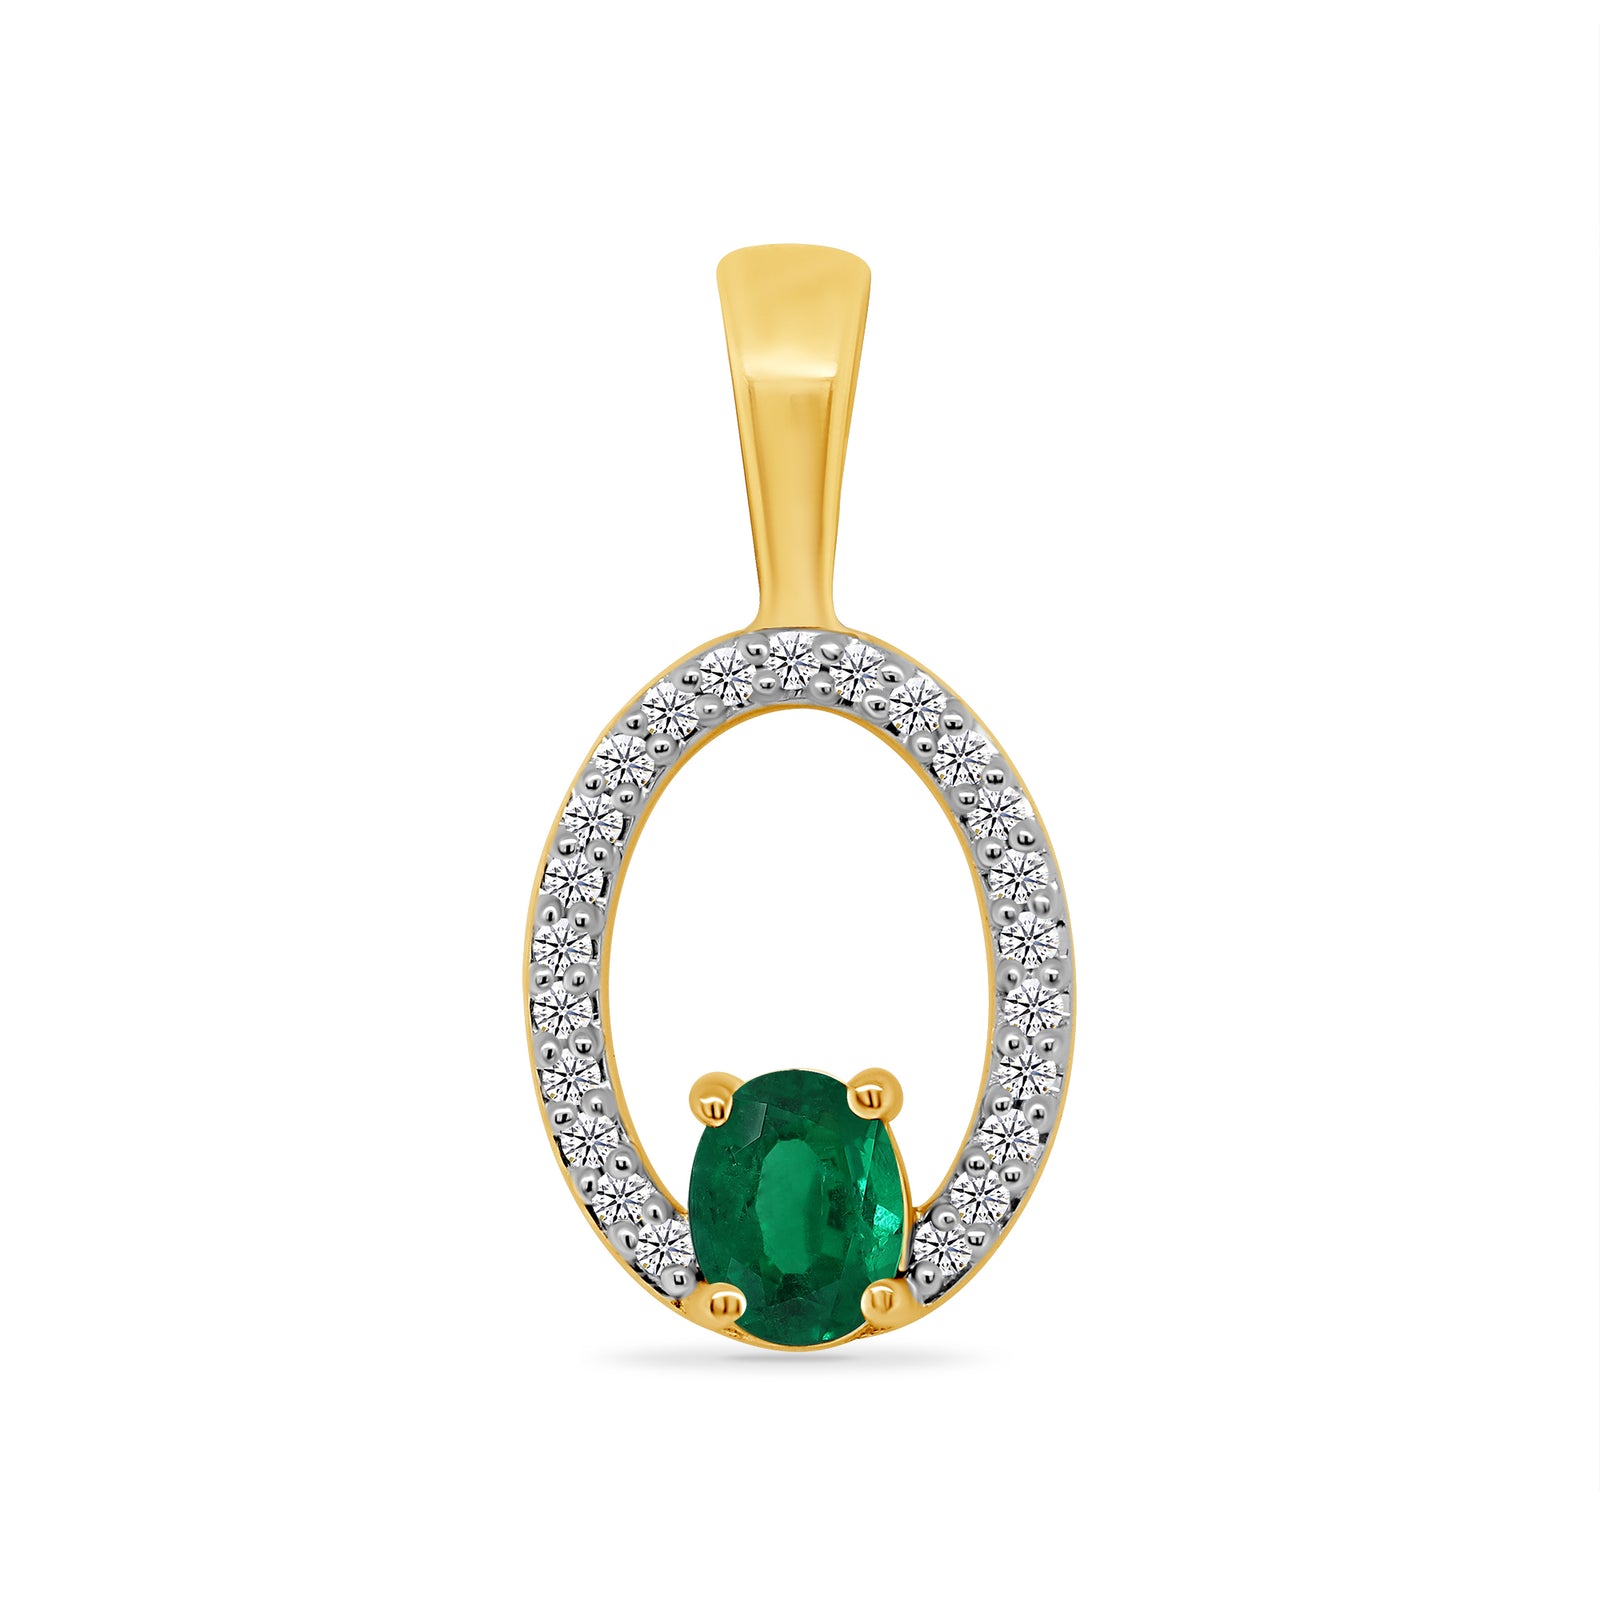 9ct gold 5x3mm oval emerald & diamond pendant 0.10ct